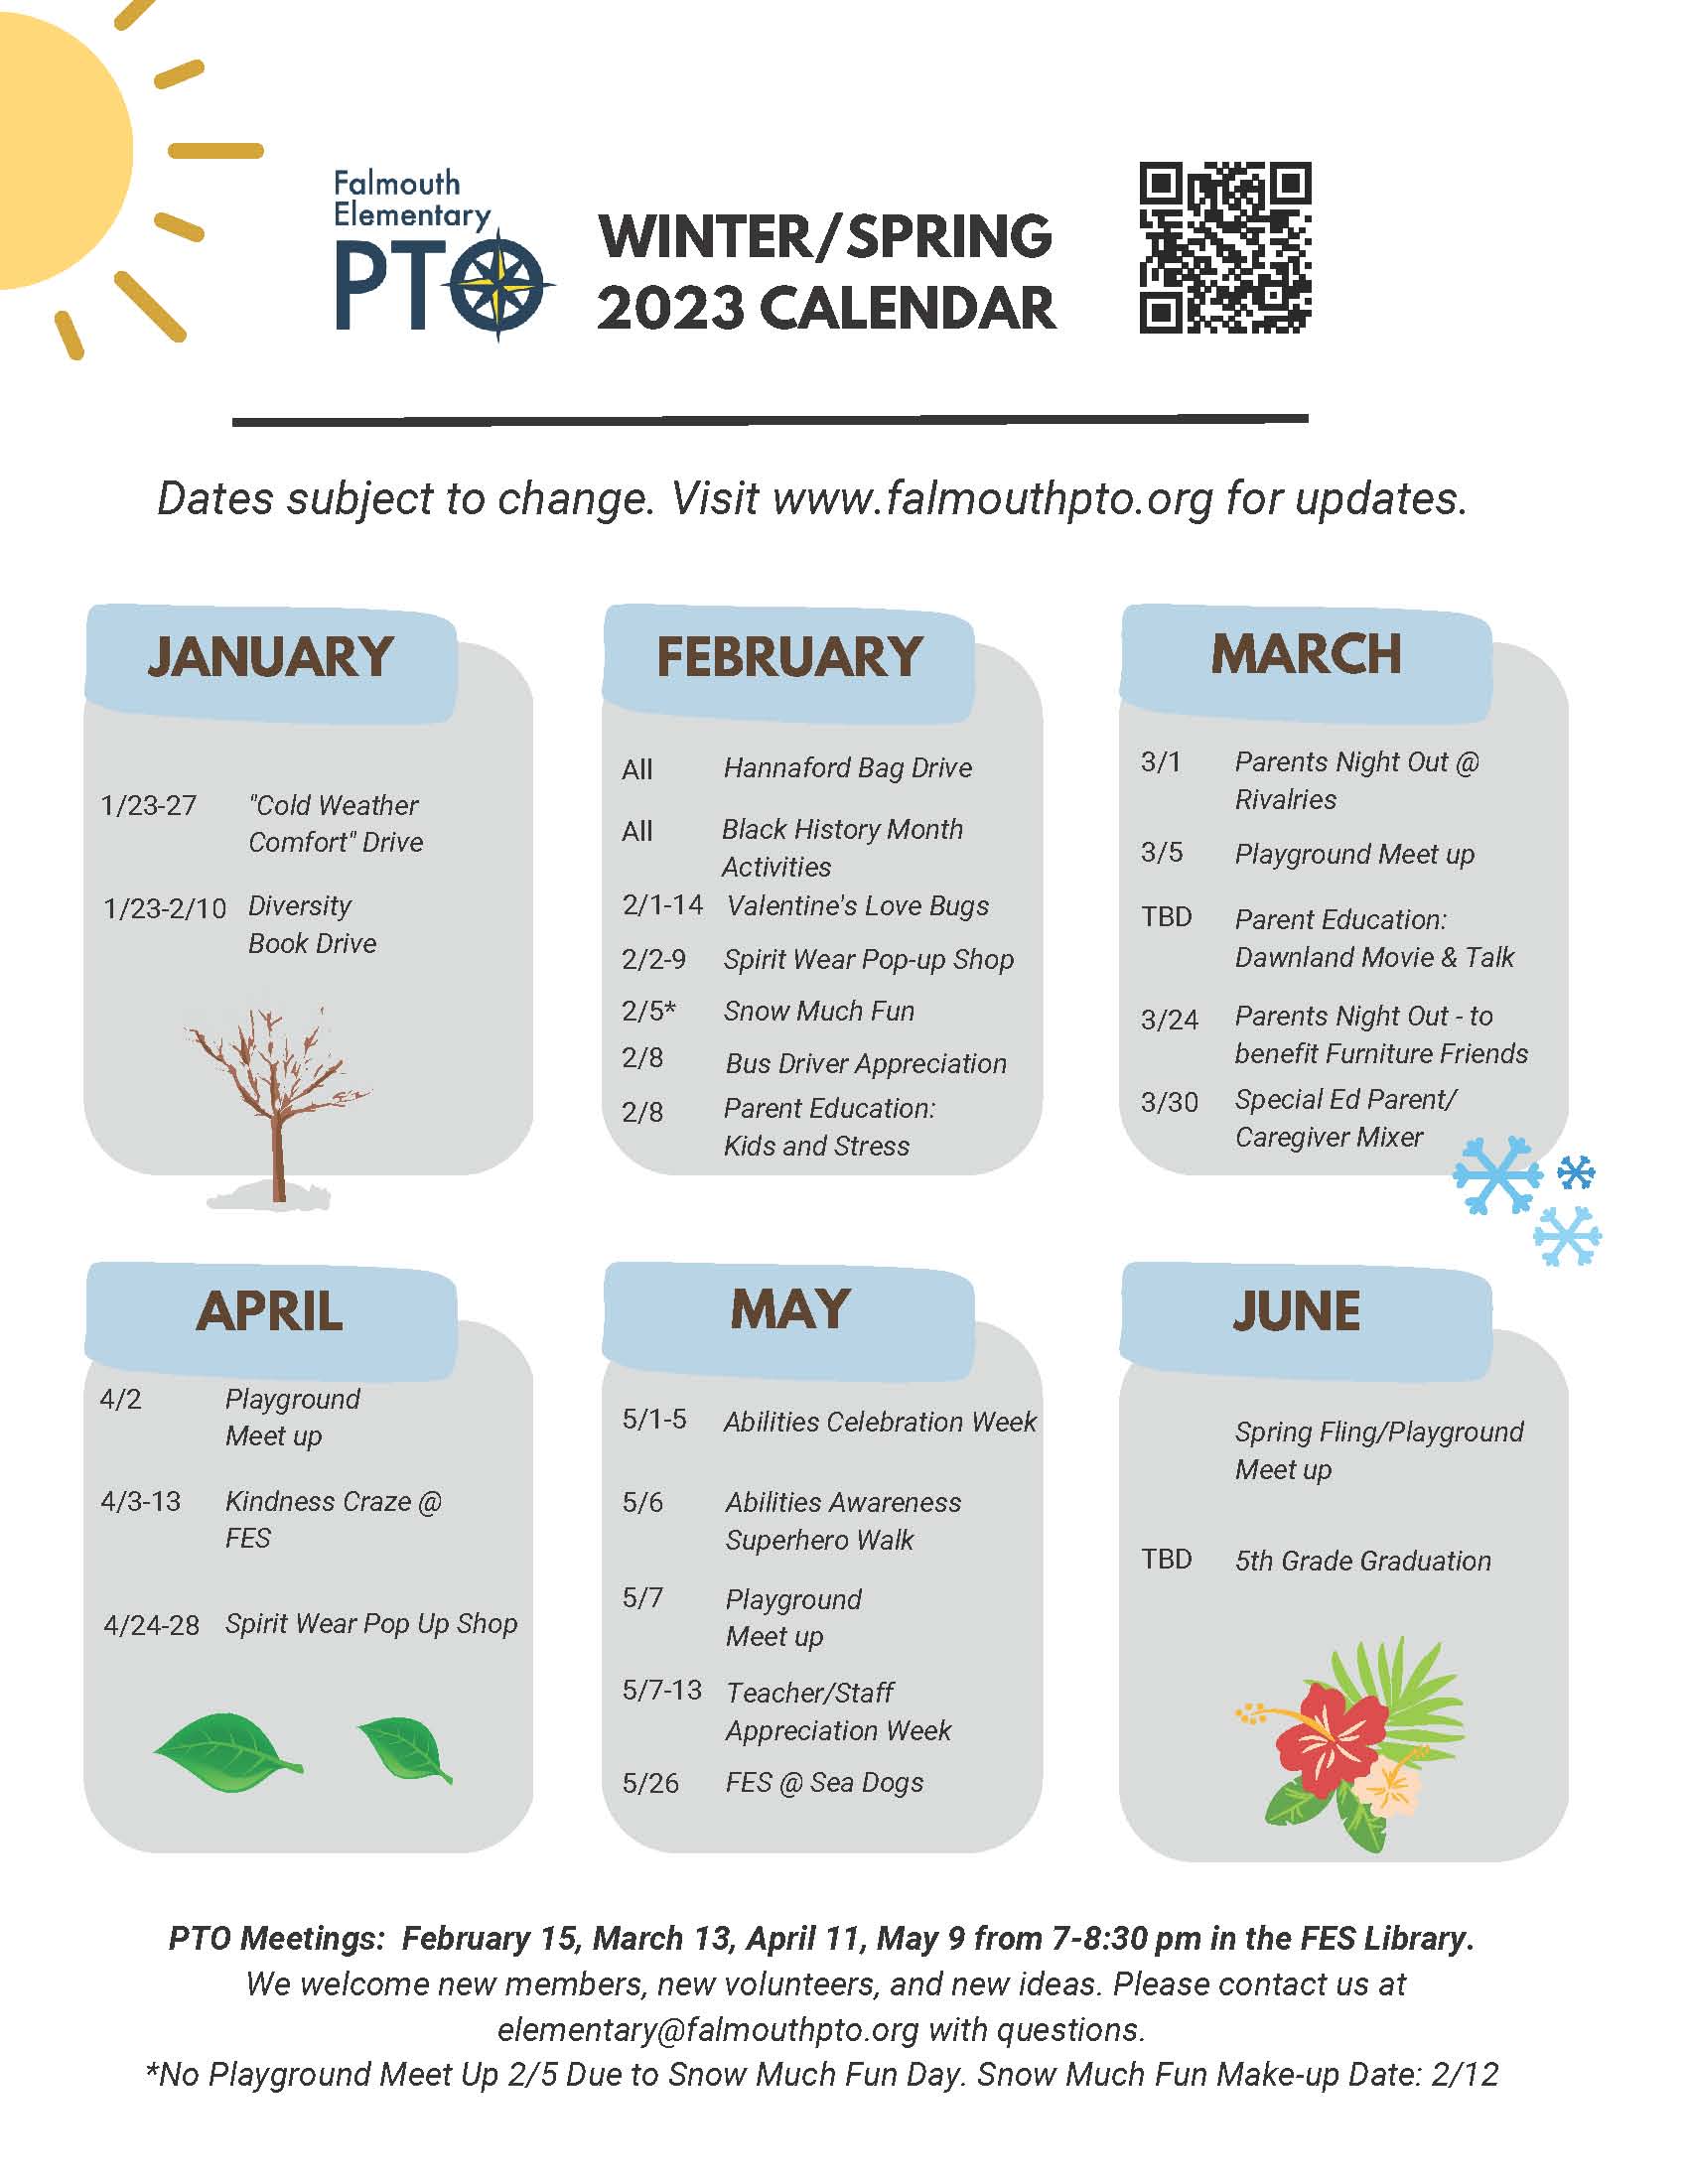 Winter/Spring Calendar 2023